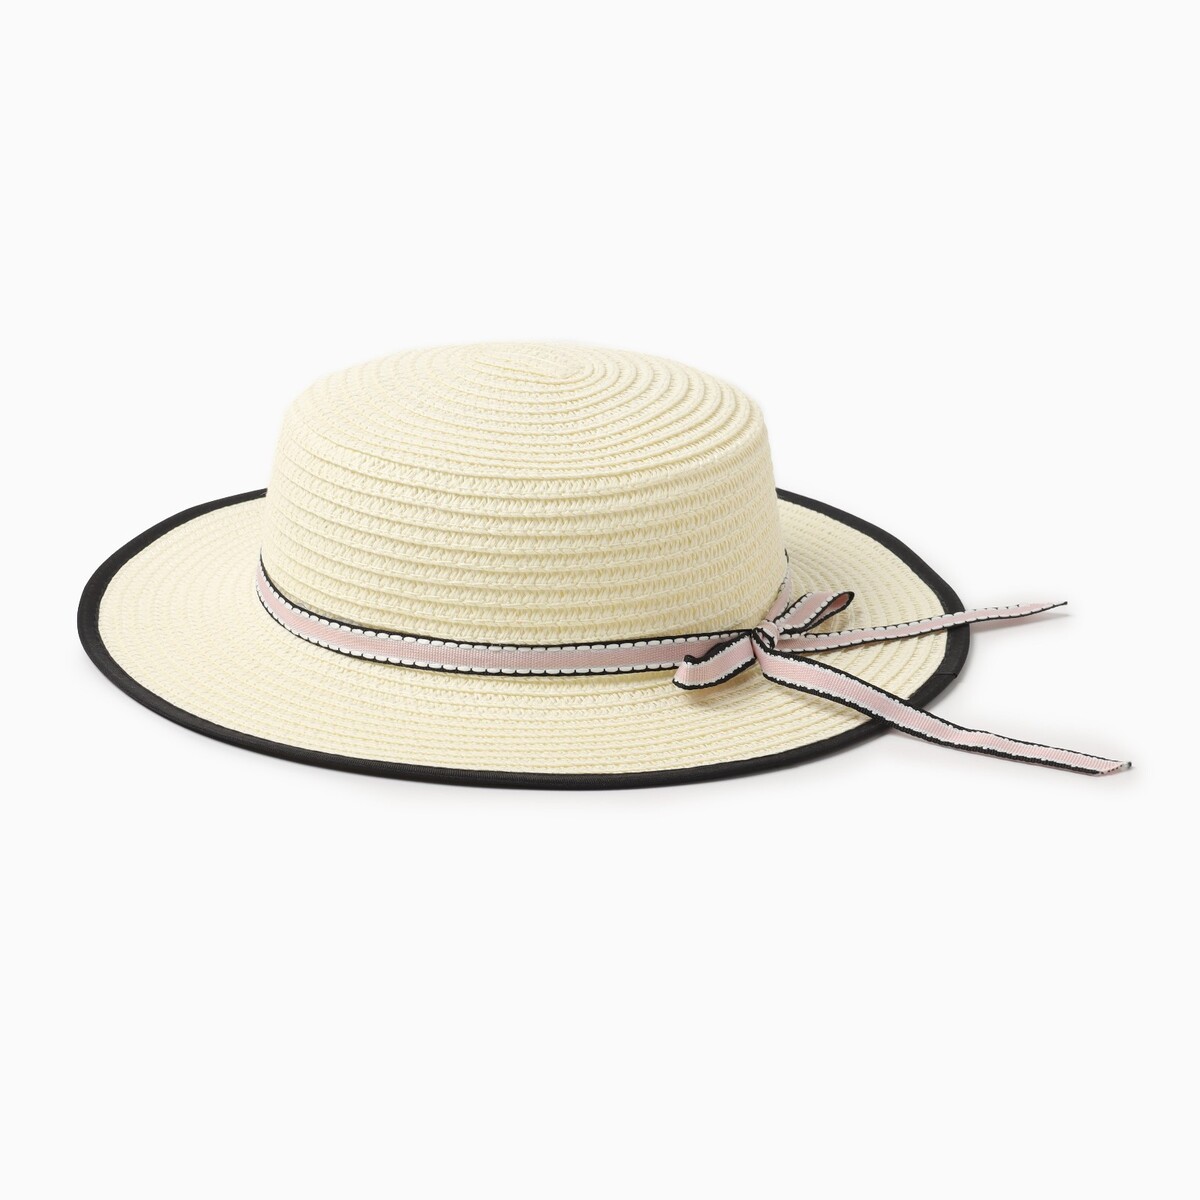 Шляпа MINAKU, цвет белый